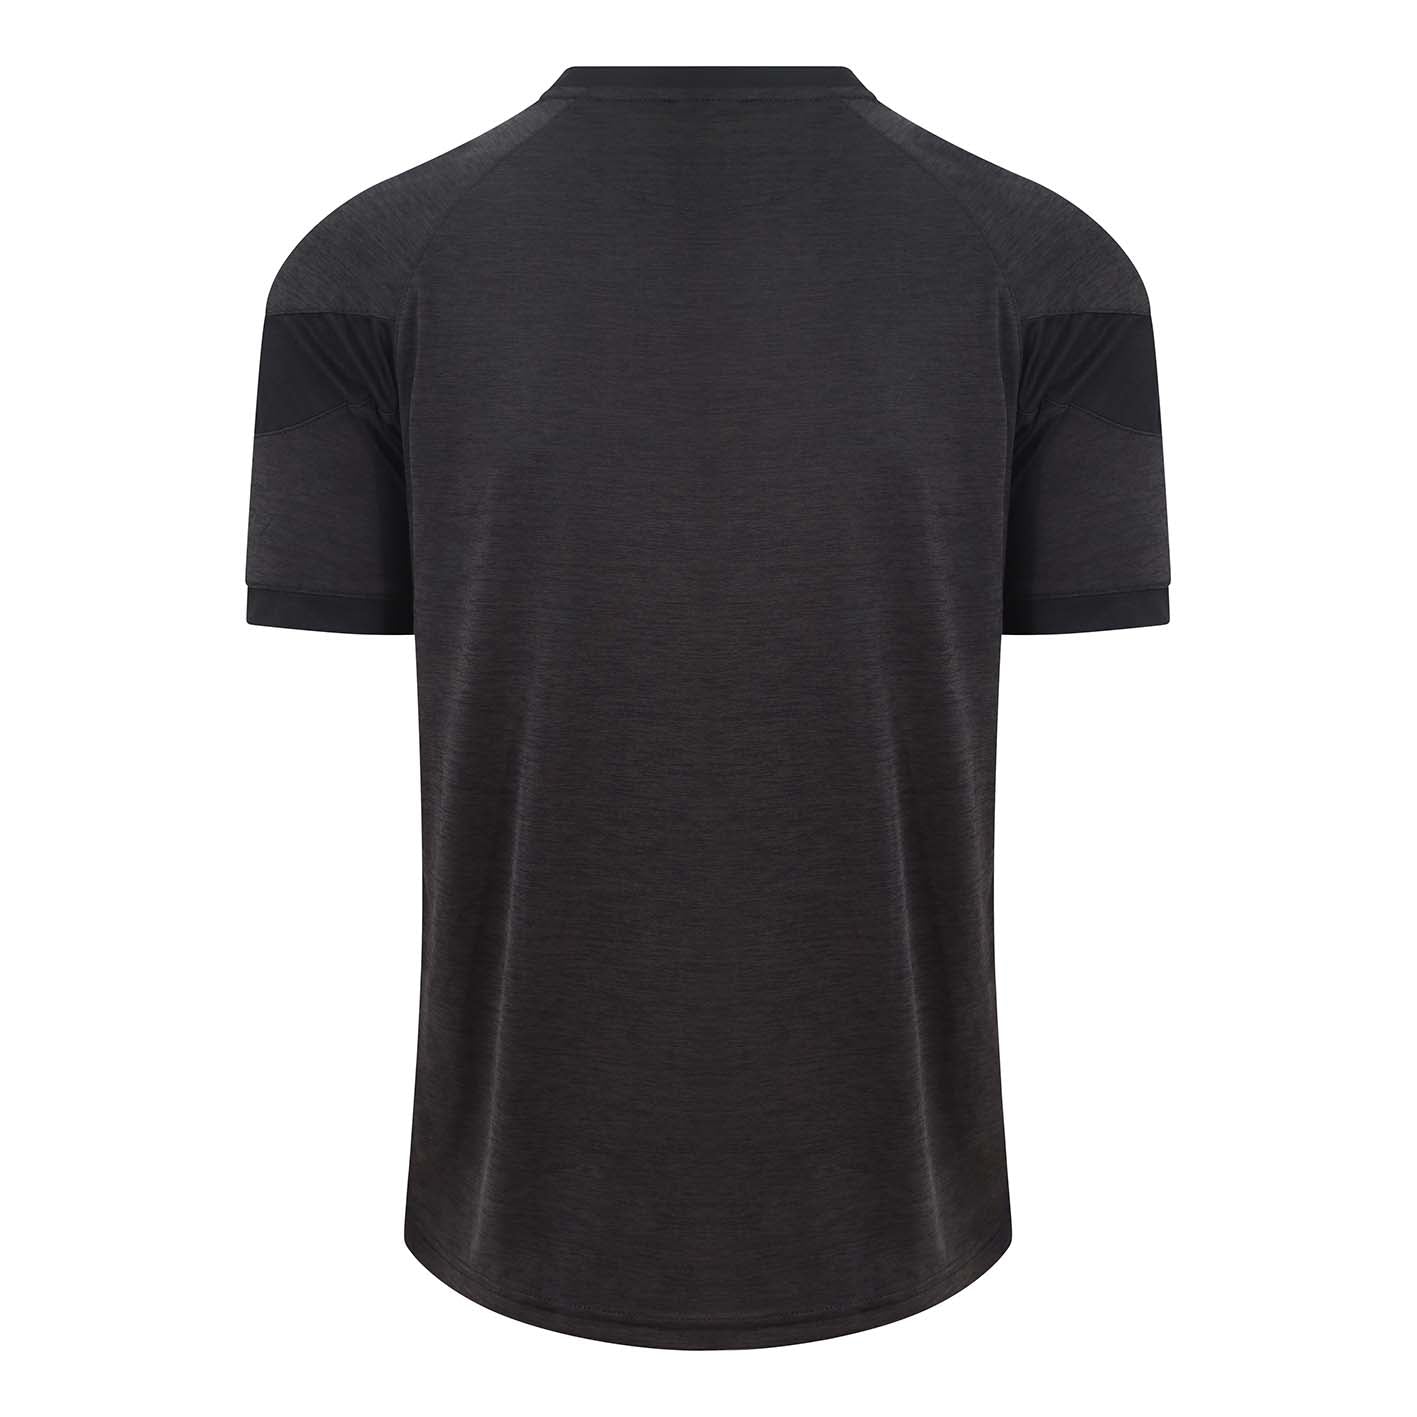 Mc Keever Boyne RFC Core 22 T-Shirt - Youth - Black